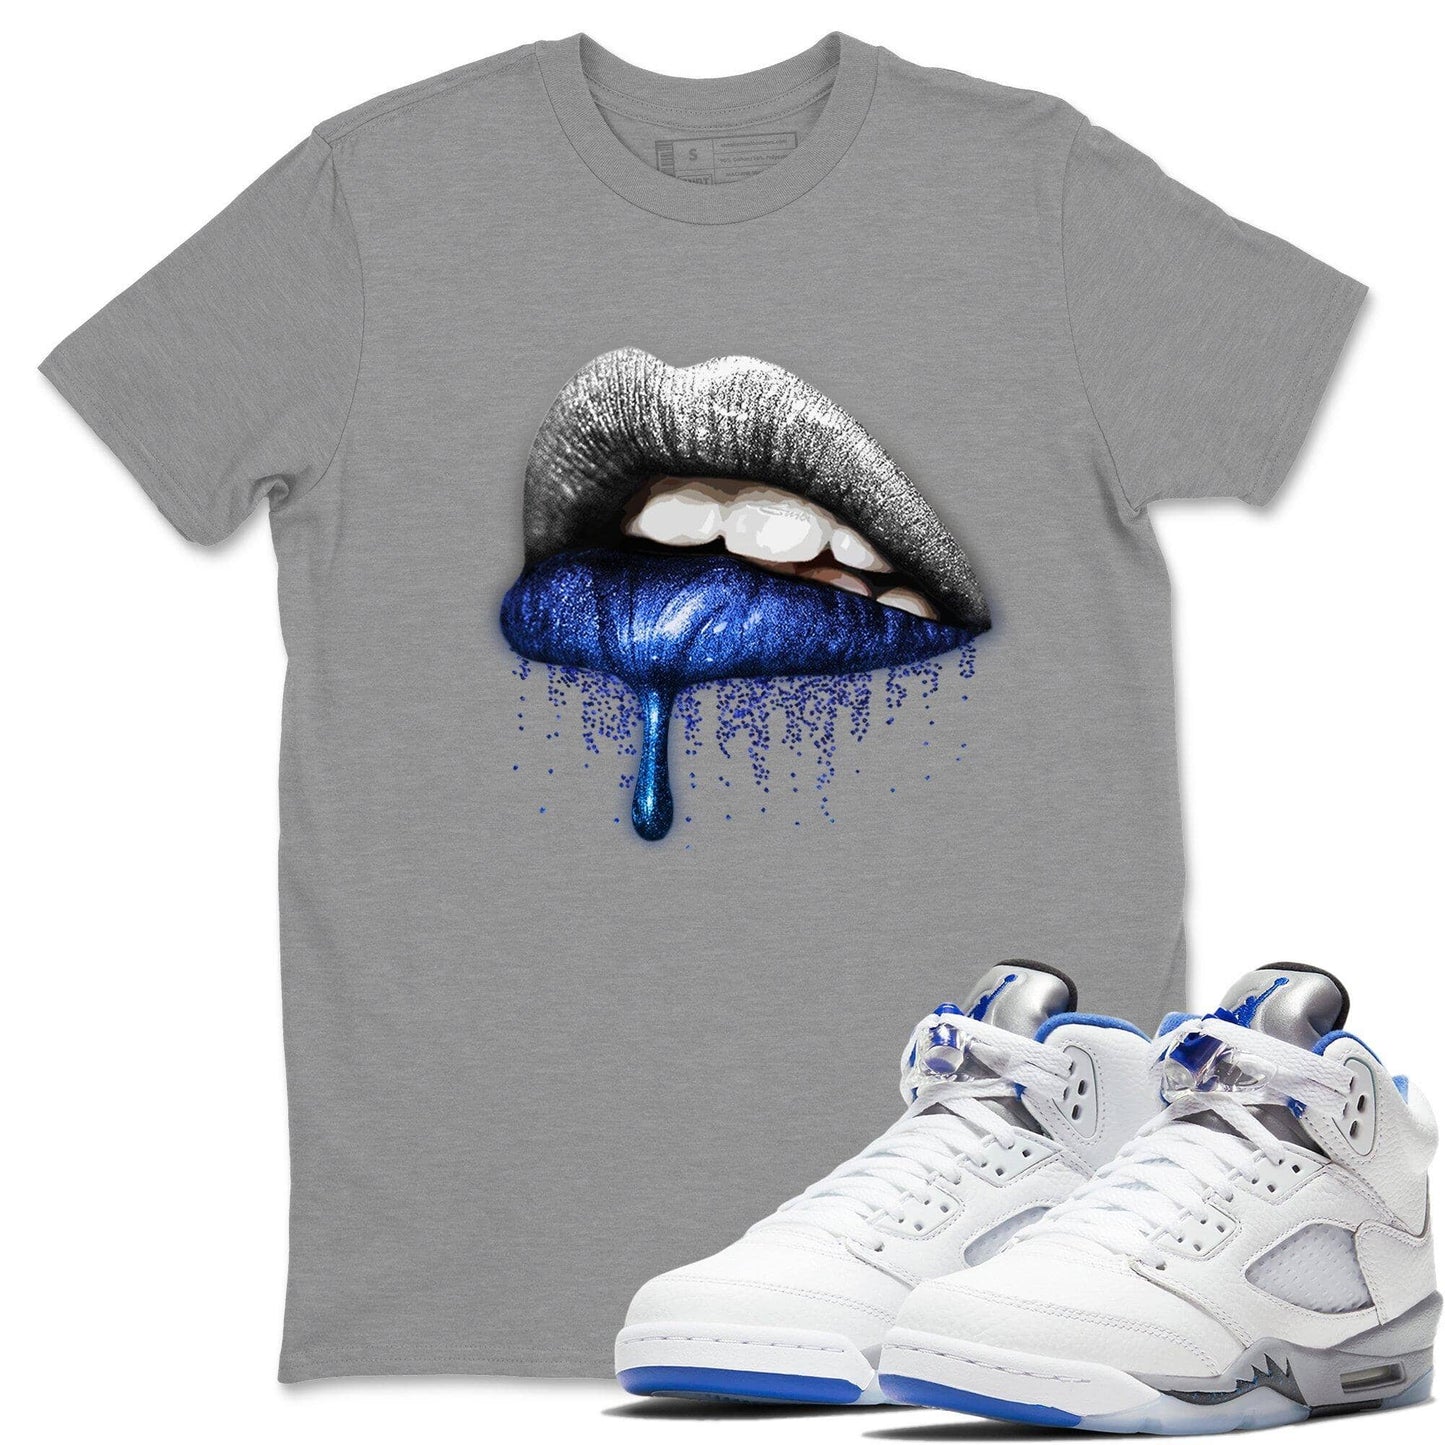 Jordan 5 Stealth Shirt To Match Jordans Dripping Lips Sneaker Tees Jordan 5 Stealth Drip Gear Zone Sneaker Matching Clothing Unisex Shirts